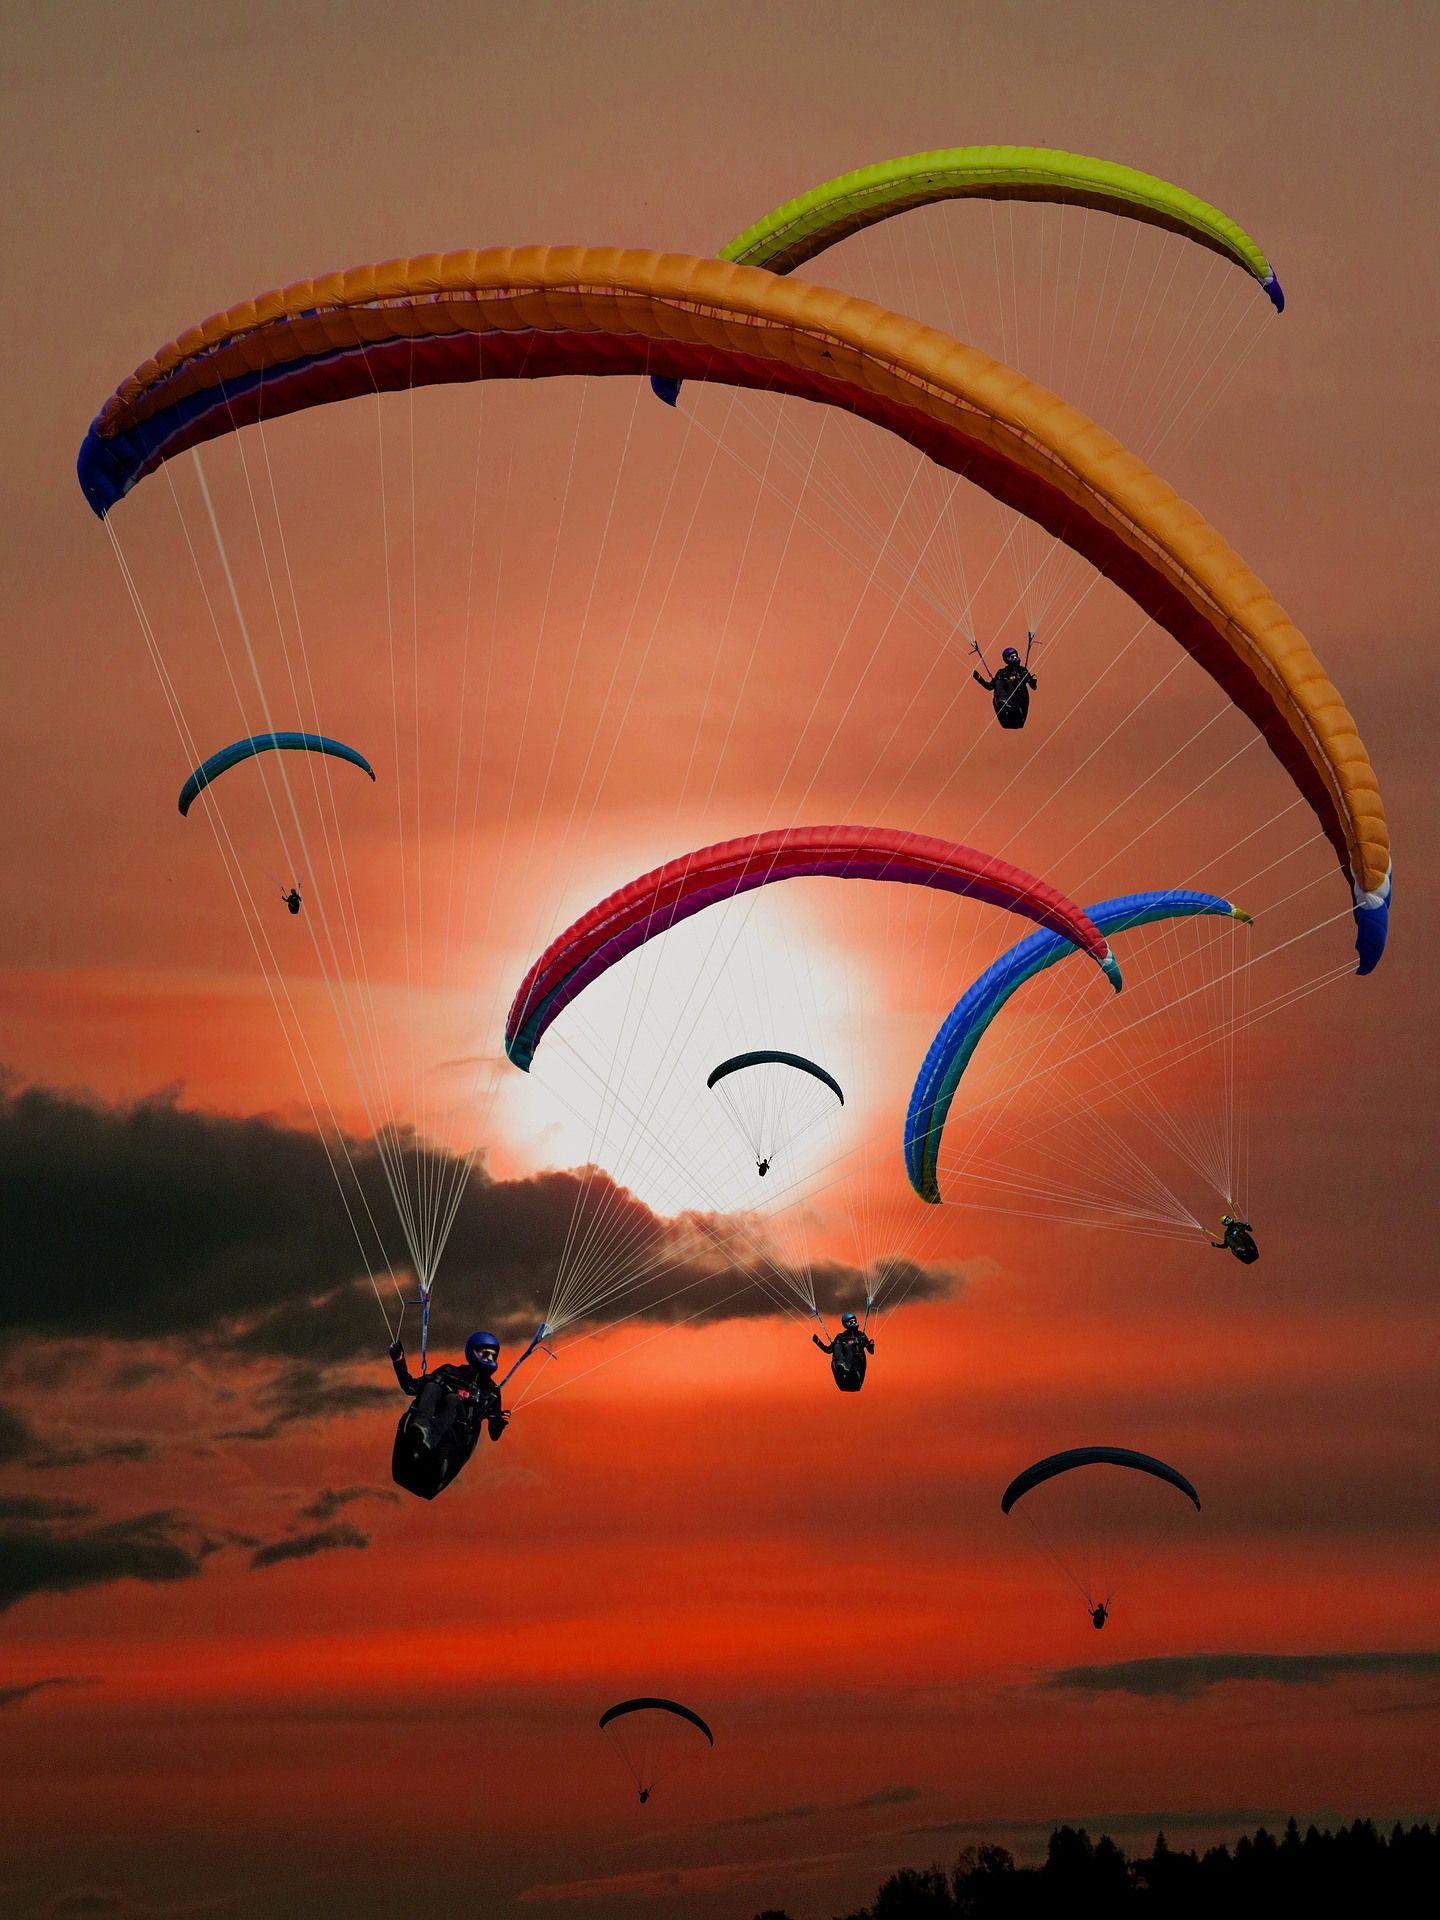 Artsy. Adventure, Skydiving, Hang gliding